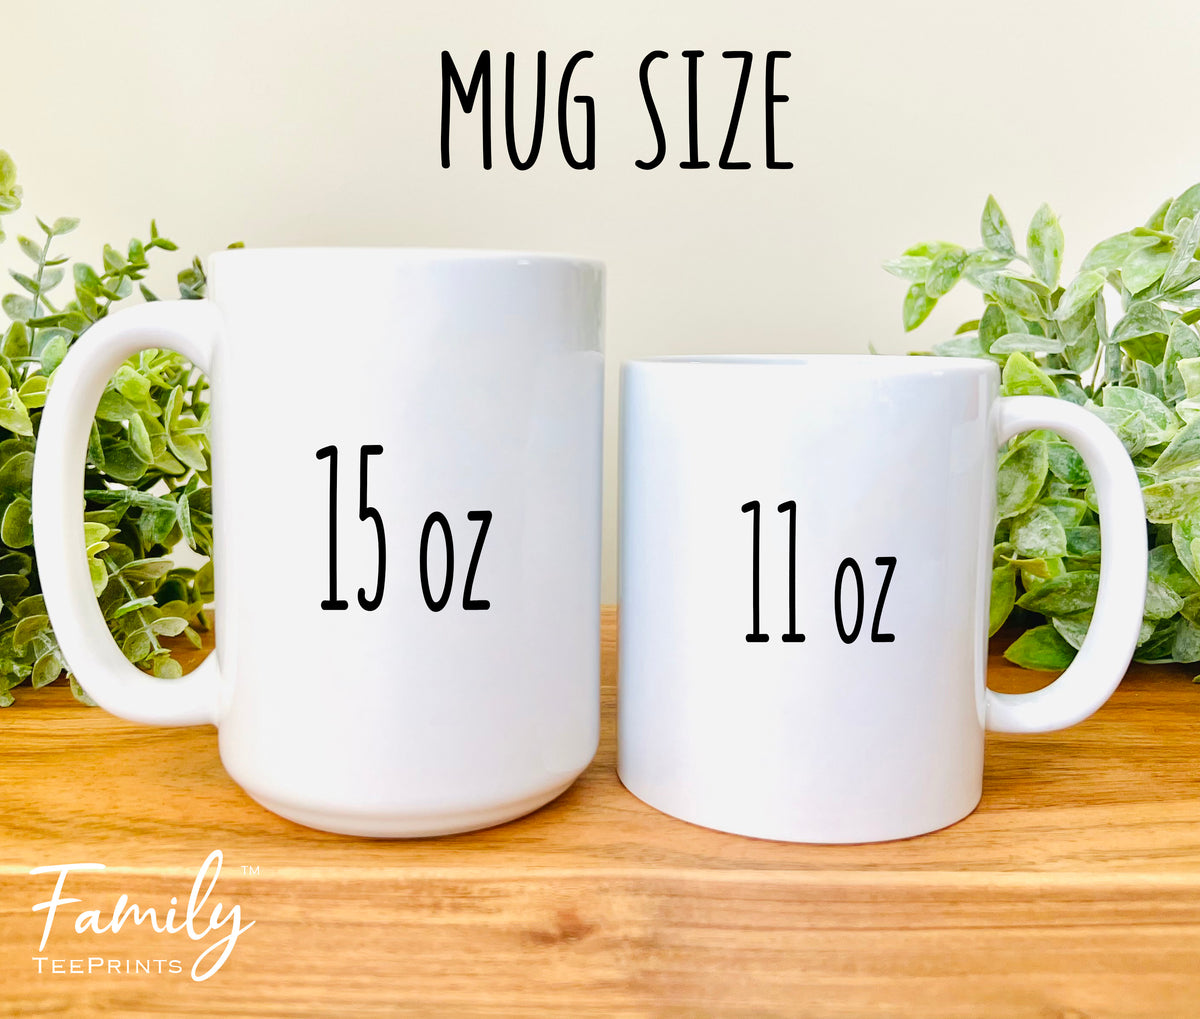 Always Be Yourself Unless You Can Be A Hedgehog - Coffee Mug - Hedgehog Gift - Hedgehog Mug - familyteeprints